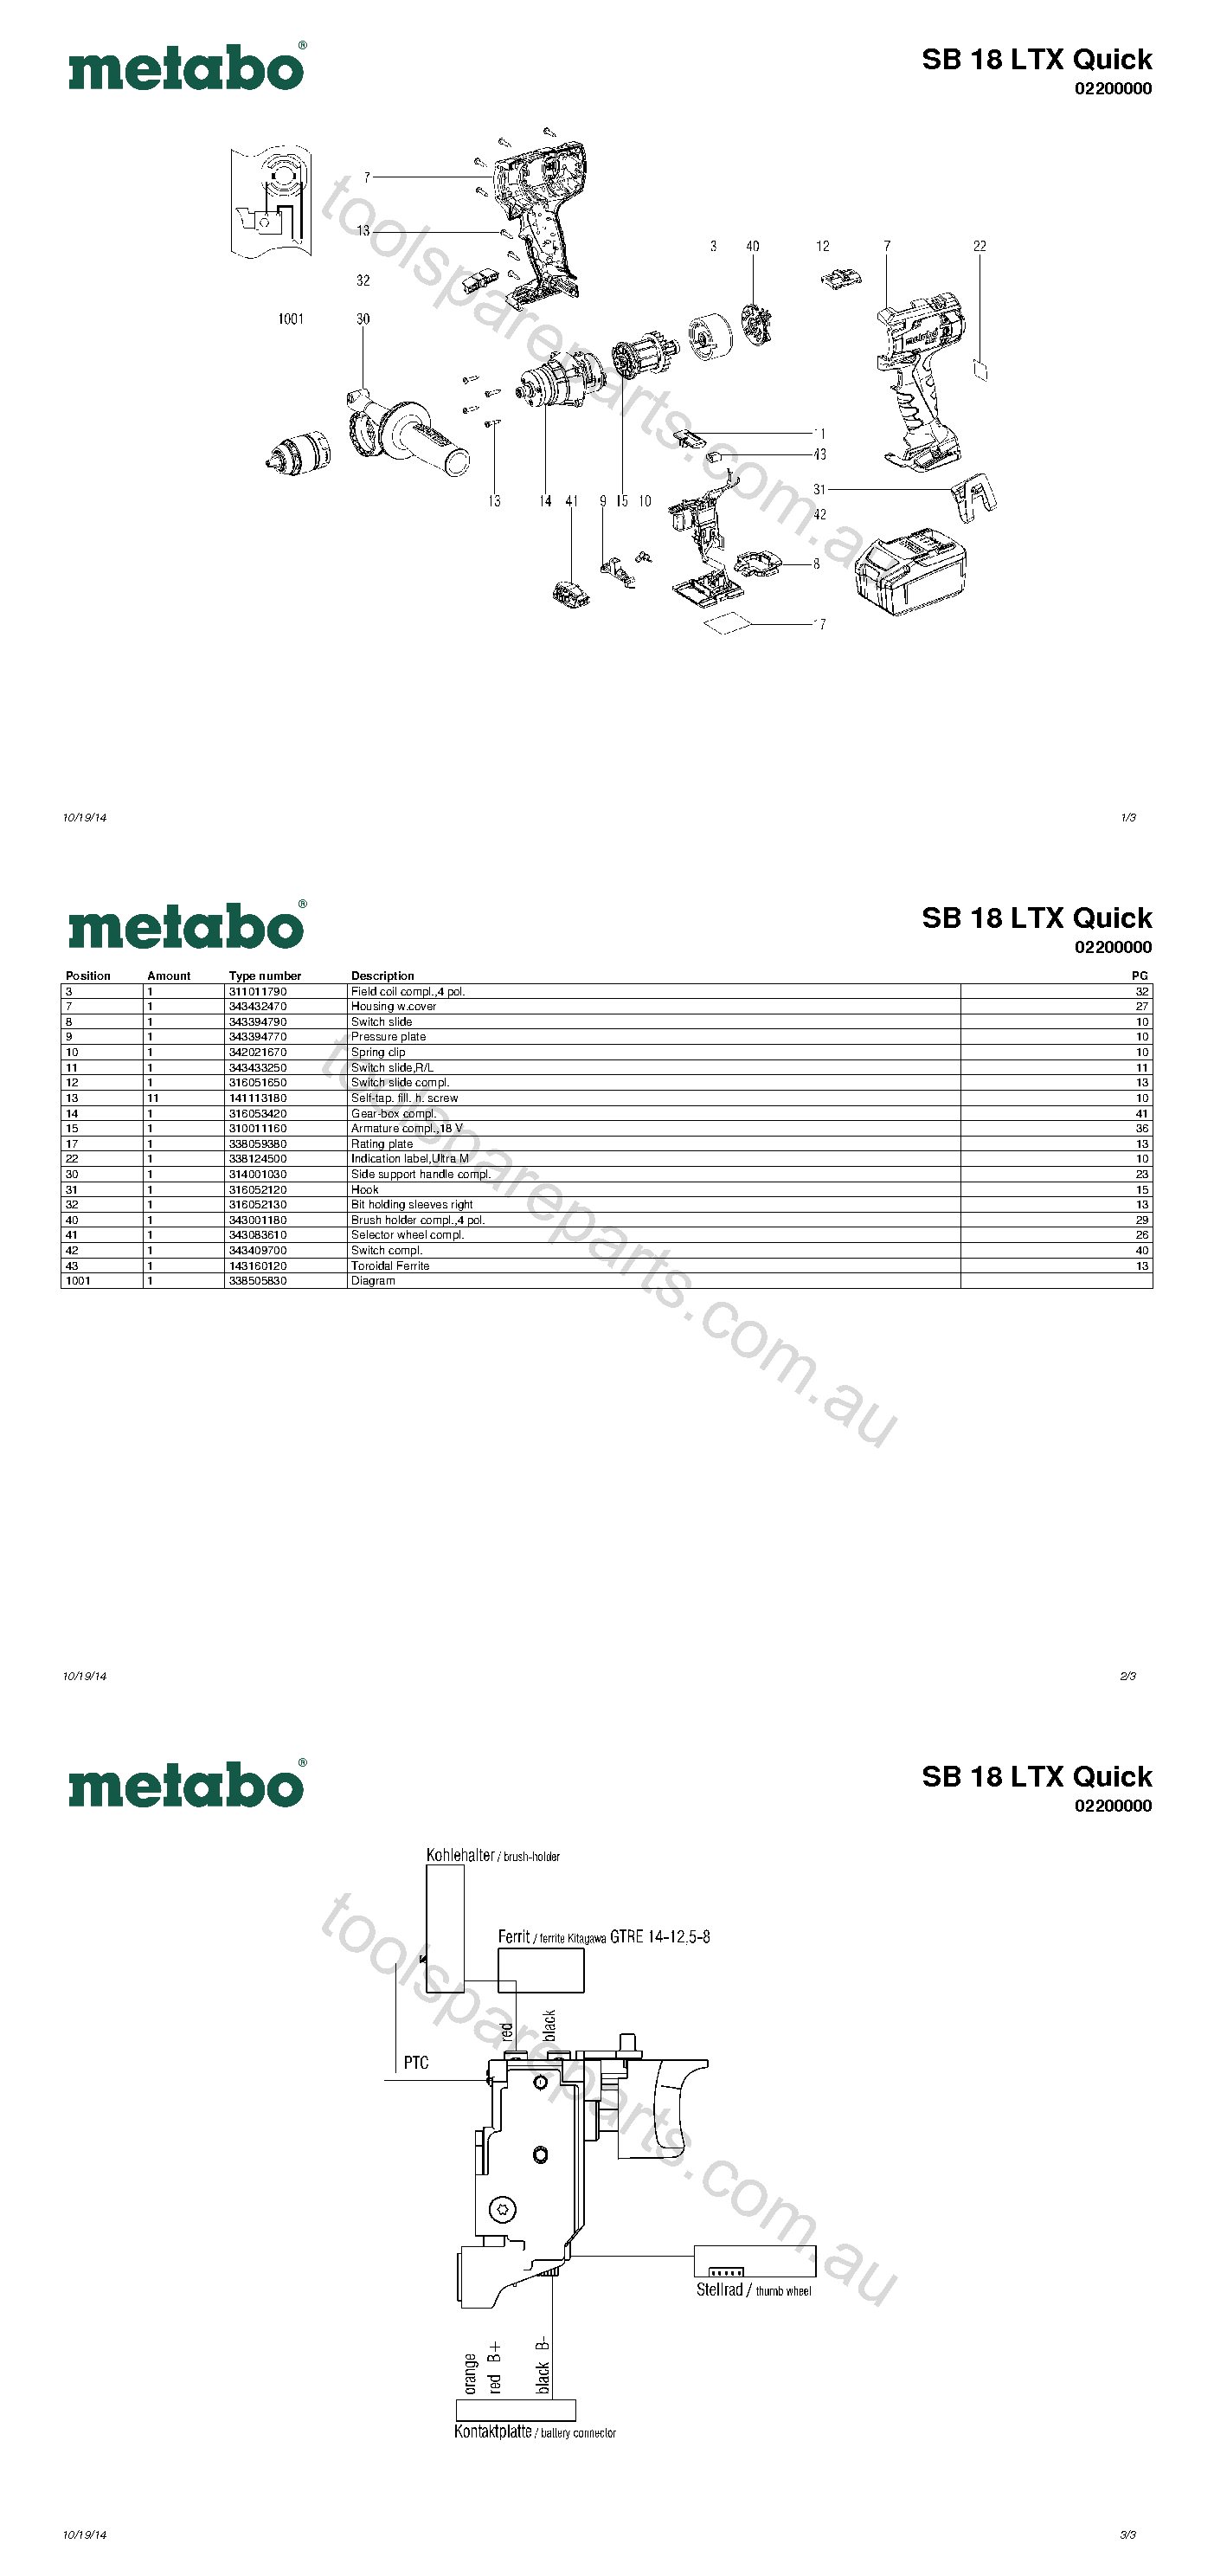 Metabo SB 18 LTX Quick 02200000  Diagram 1